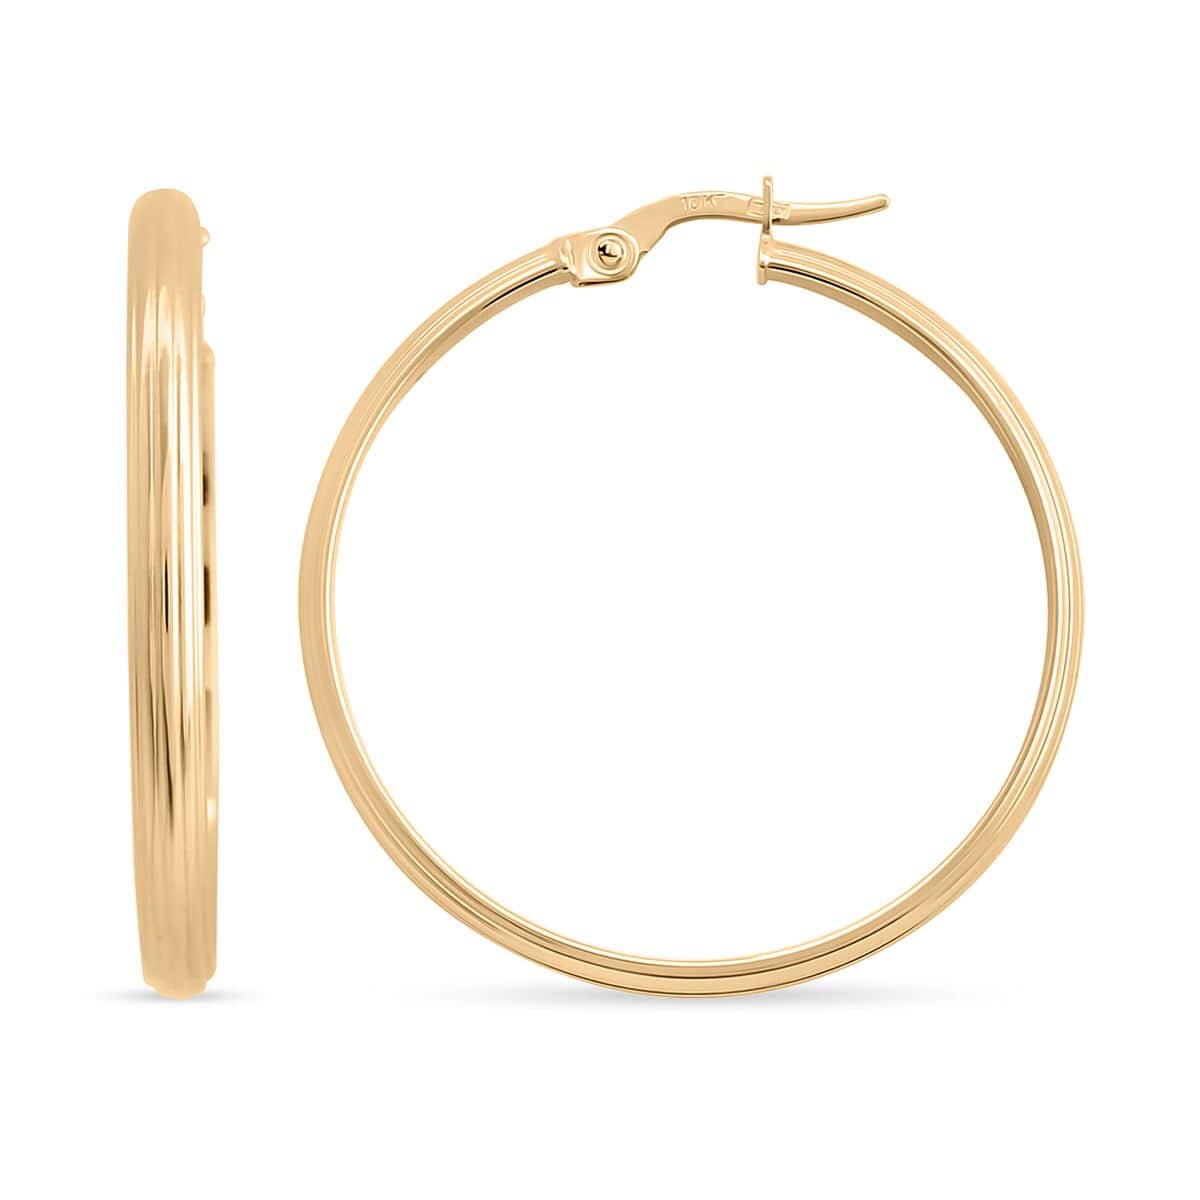 Buy Italian 10K Yellow Gold Hoop Earrings 1.65 Grams at ShopLC.